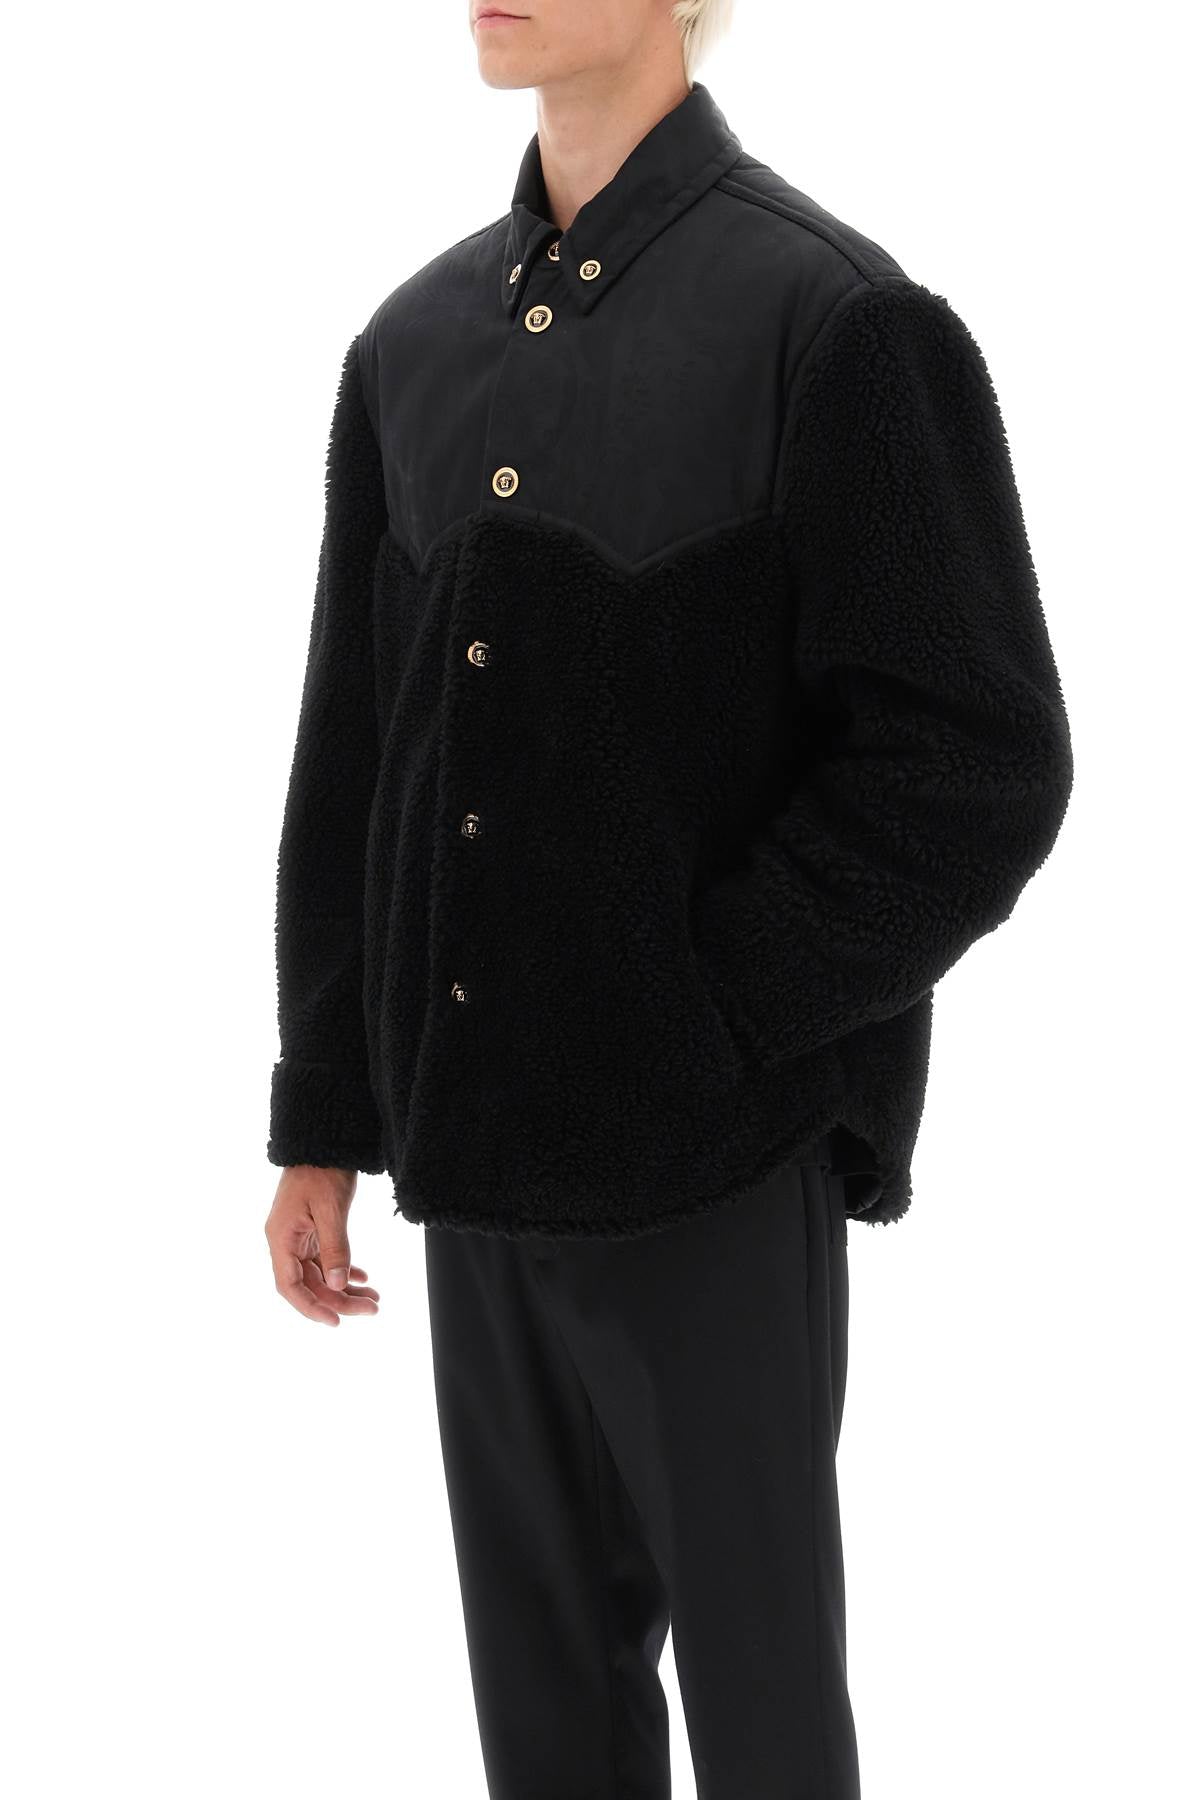 Versace barocco silhouette fleece jacket-3